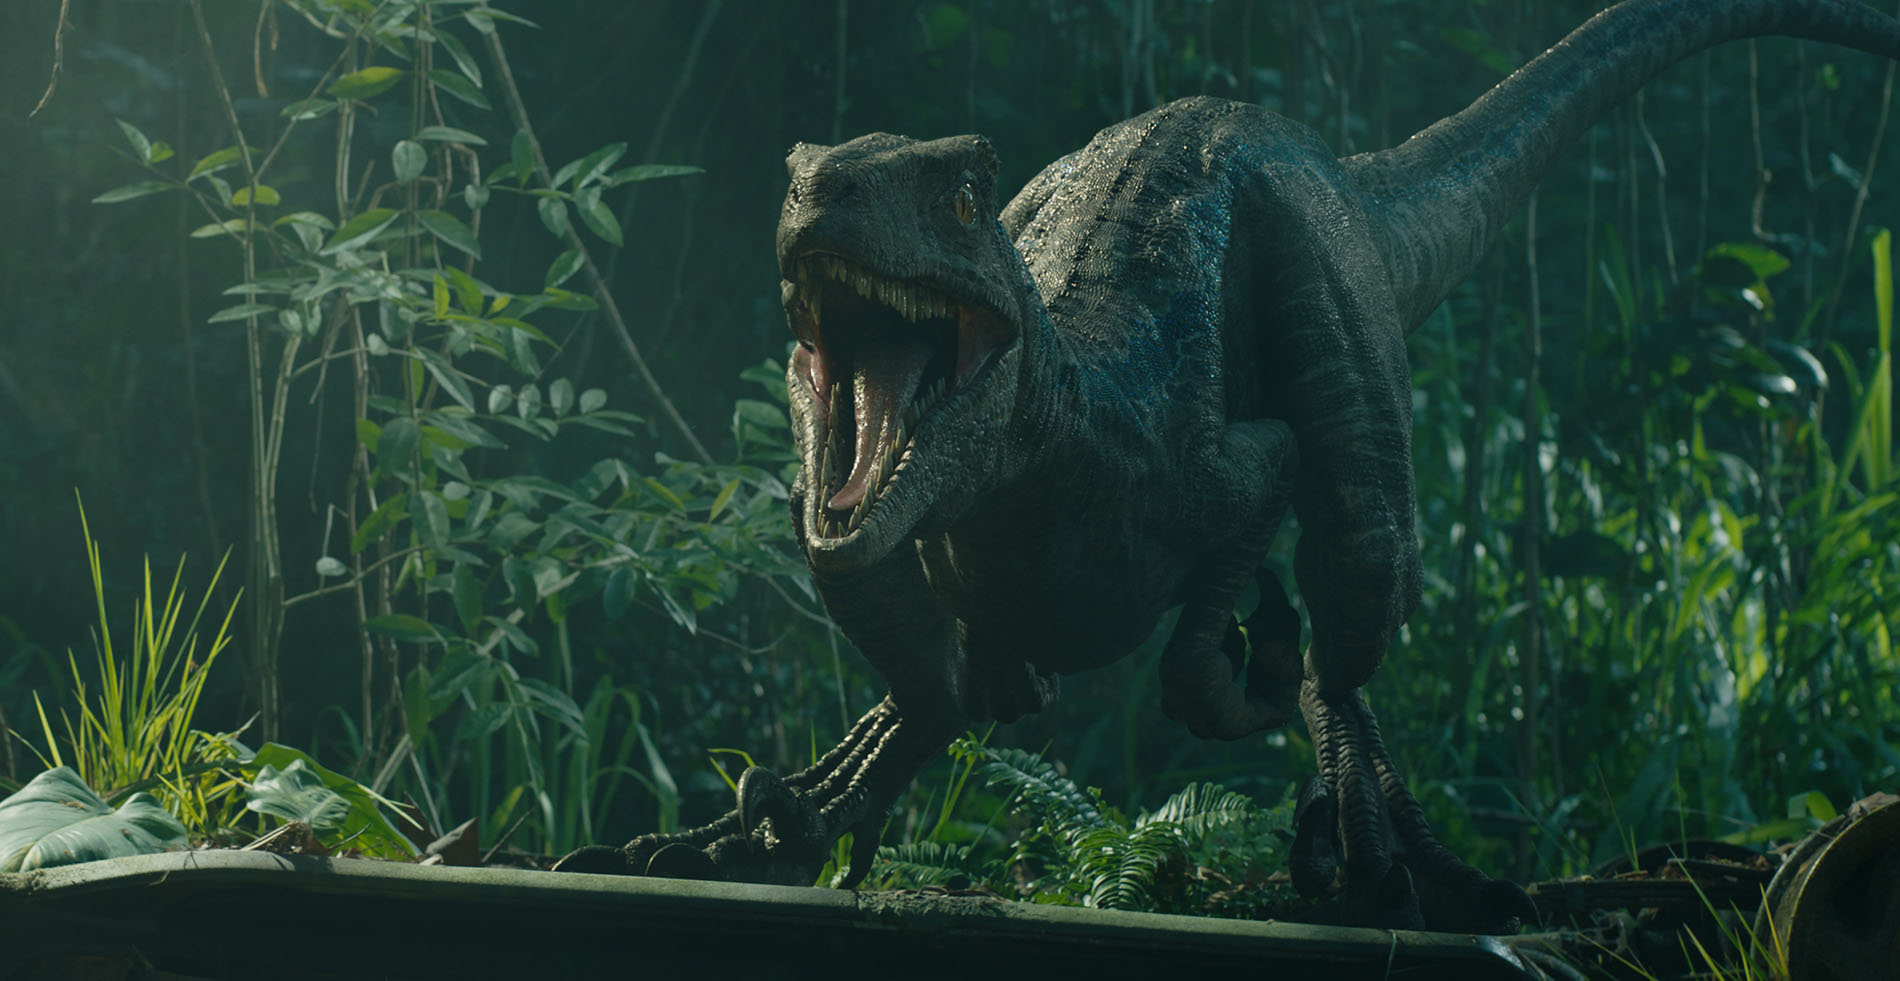 VFXShow 236: Jurassic World: Fallen Kingdom - fxguide